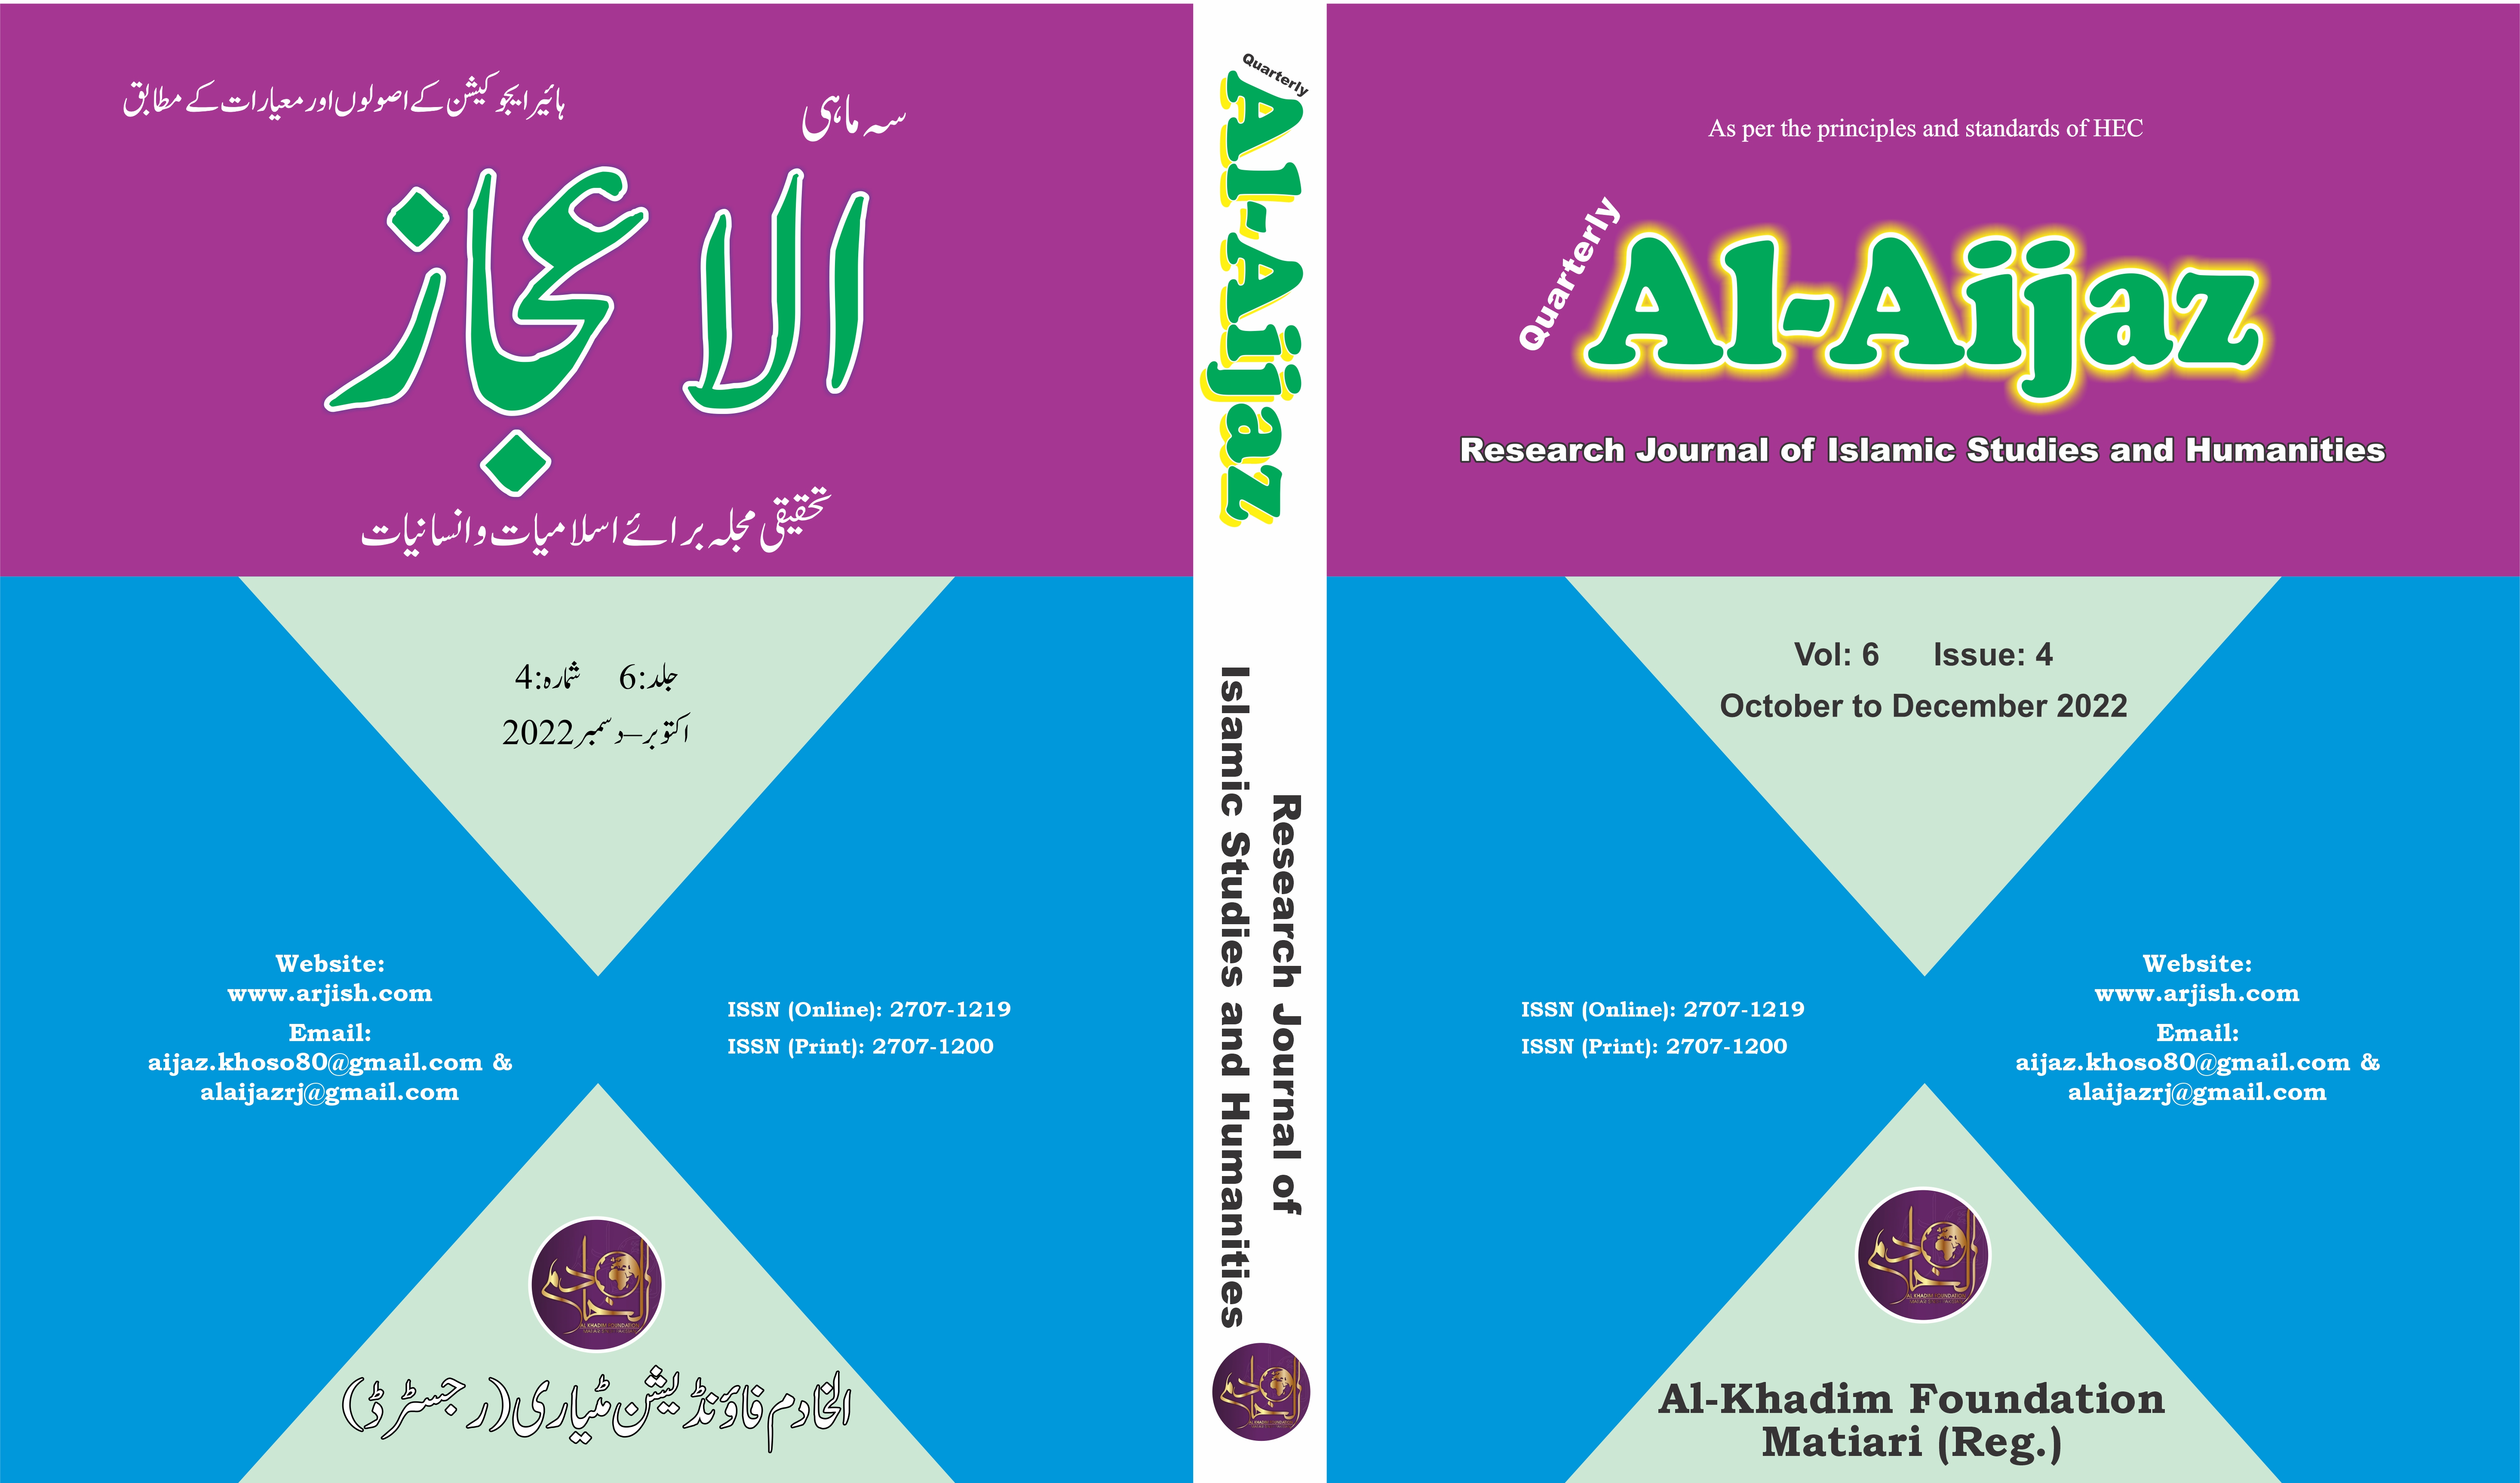 					View Vol. 6 No. 4 (2022): Al-Aijaz Research Journal of Islamic Studies & Humanities (October to December 2022)
				